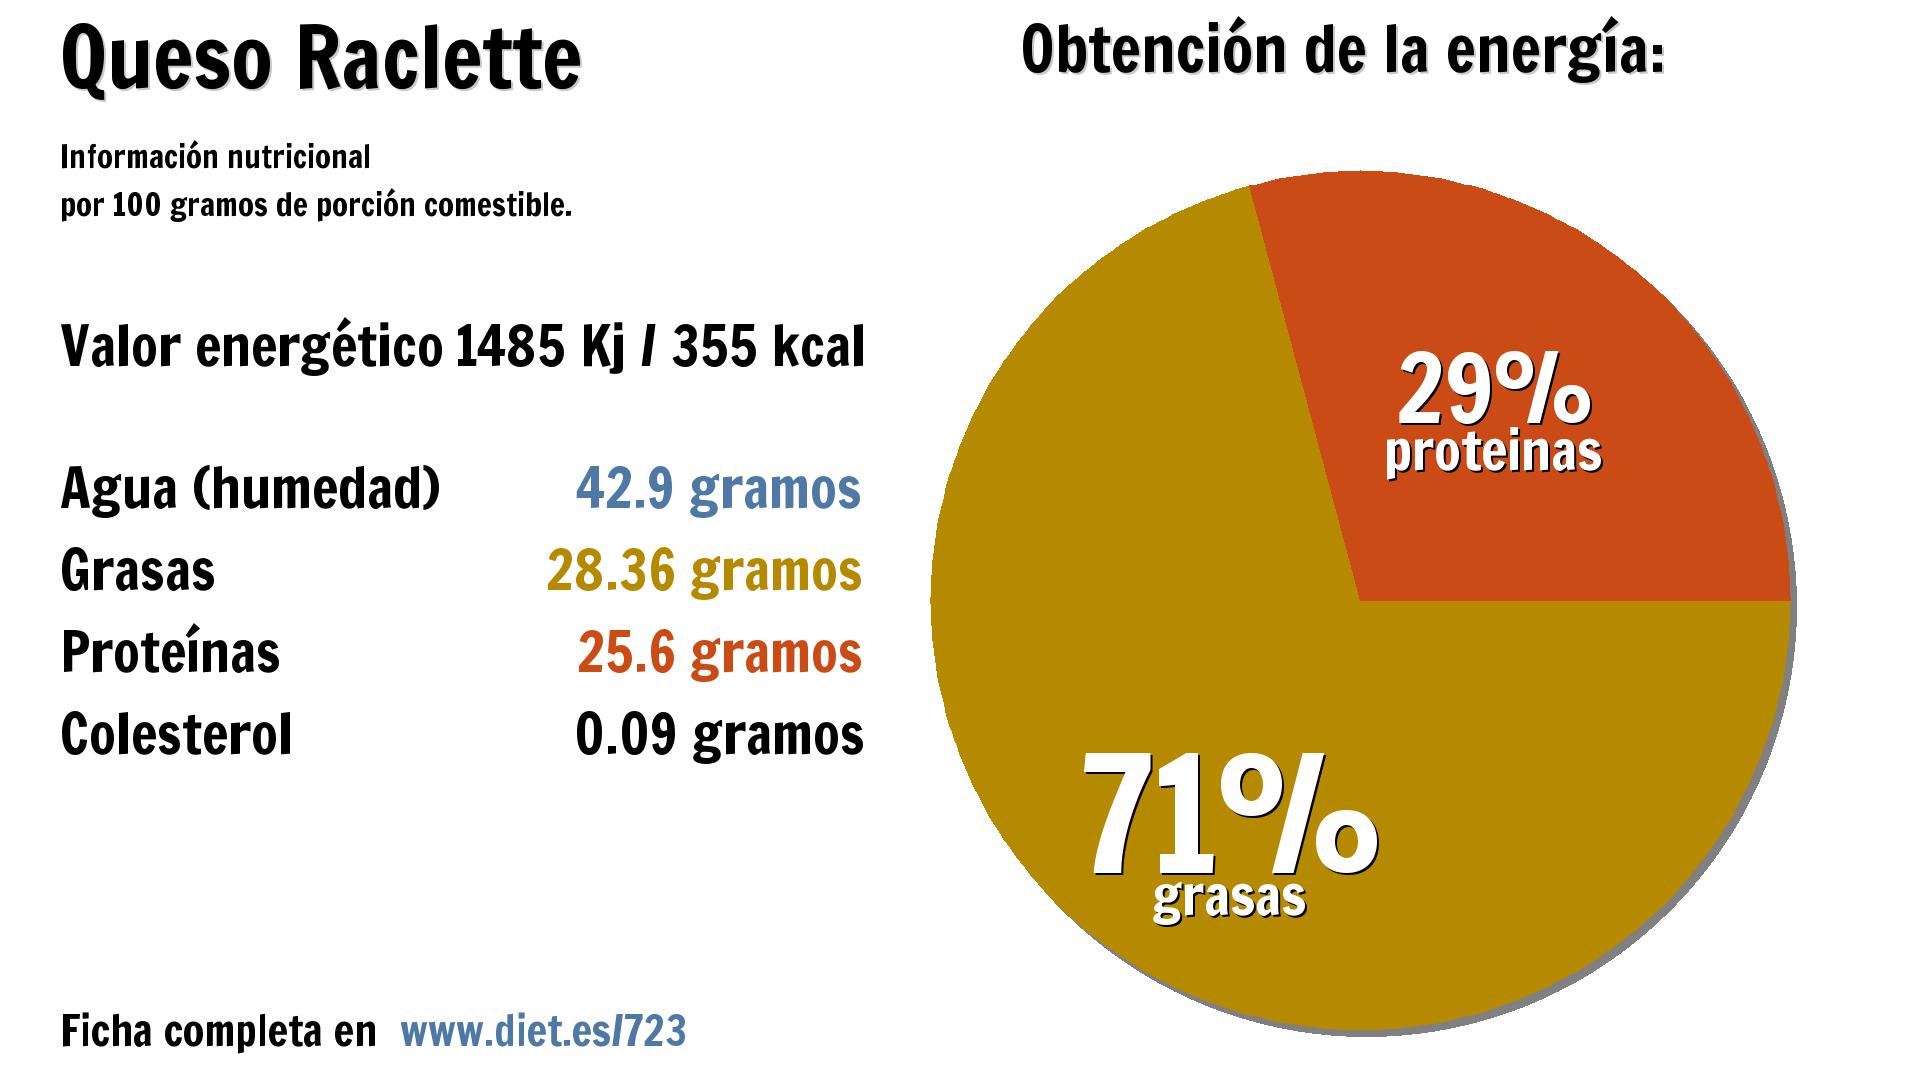 Queso Raclette: energía 1485 Kj, agua 43 g., grasas 28 g. y proteínas 26 g.